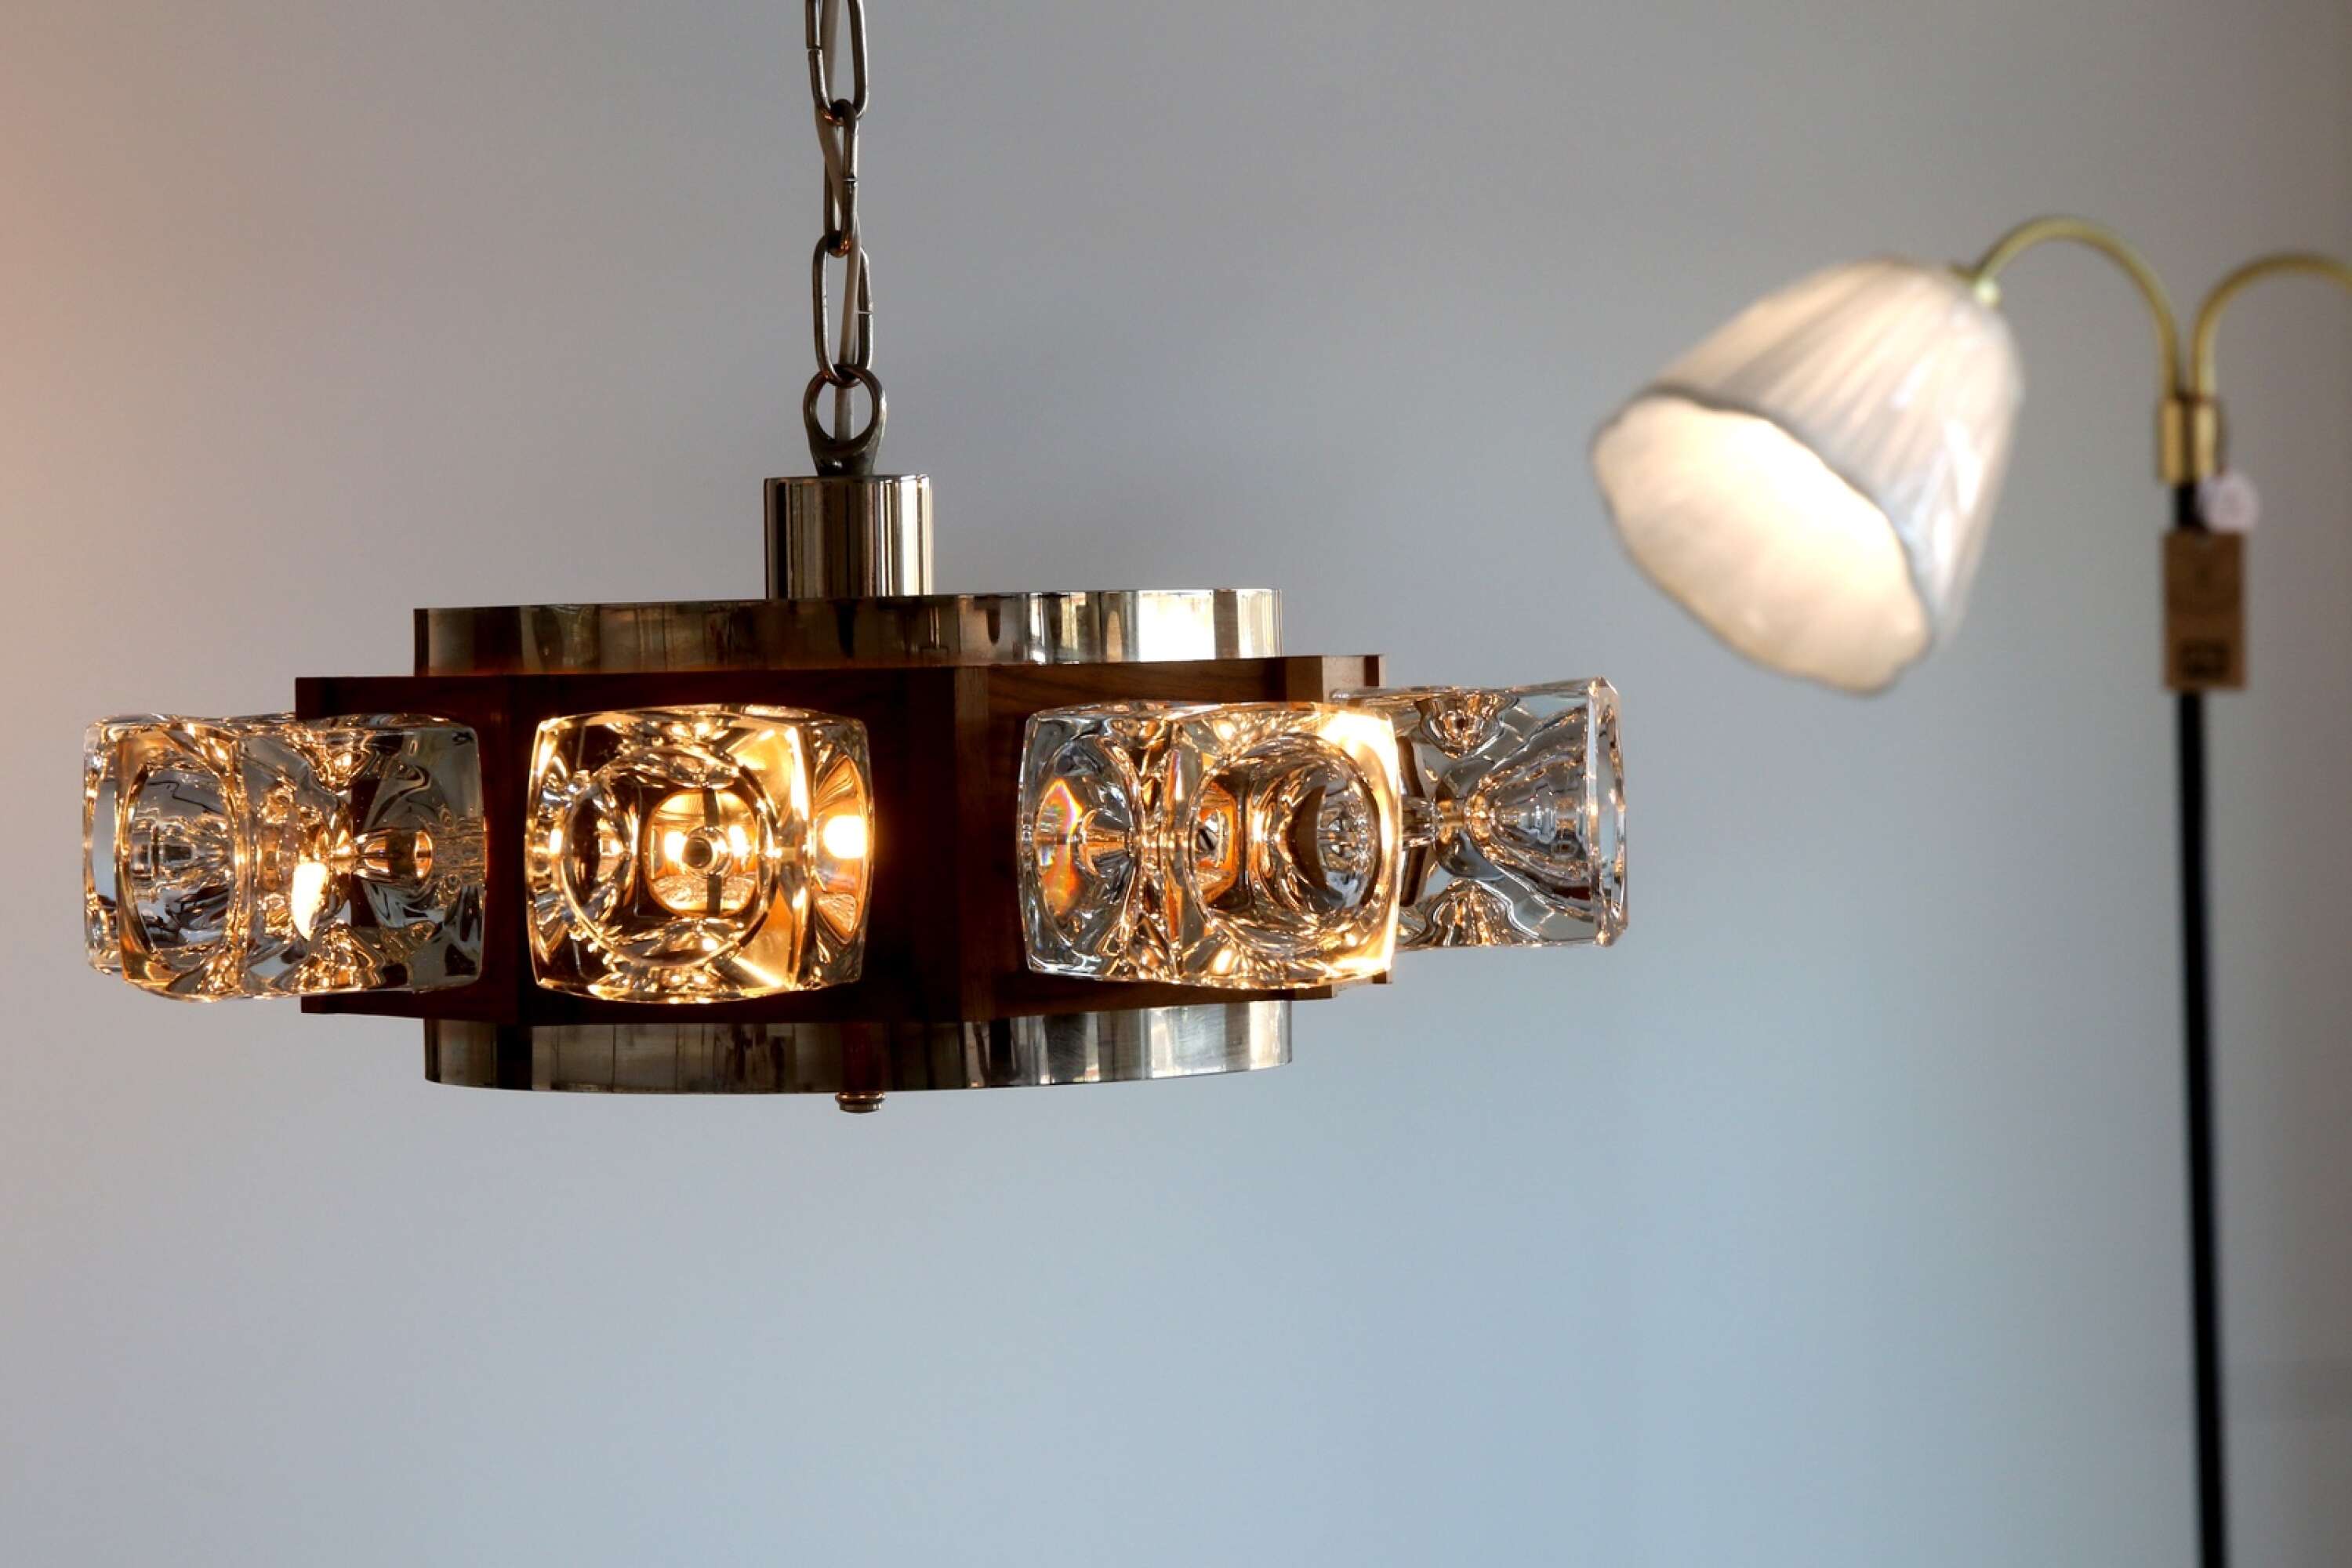 Lampa i teak med Czech Bohemia Crystal hos Deco och design.